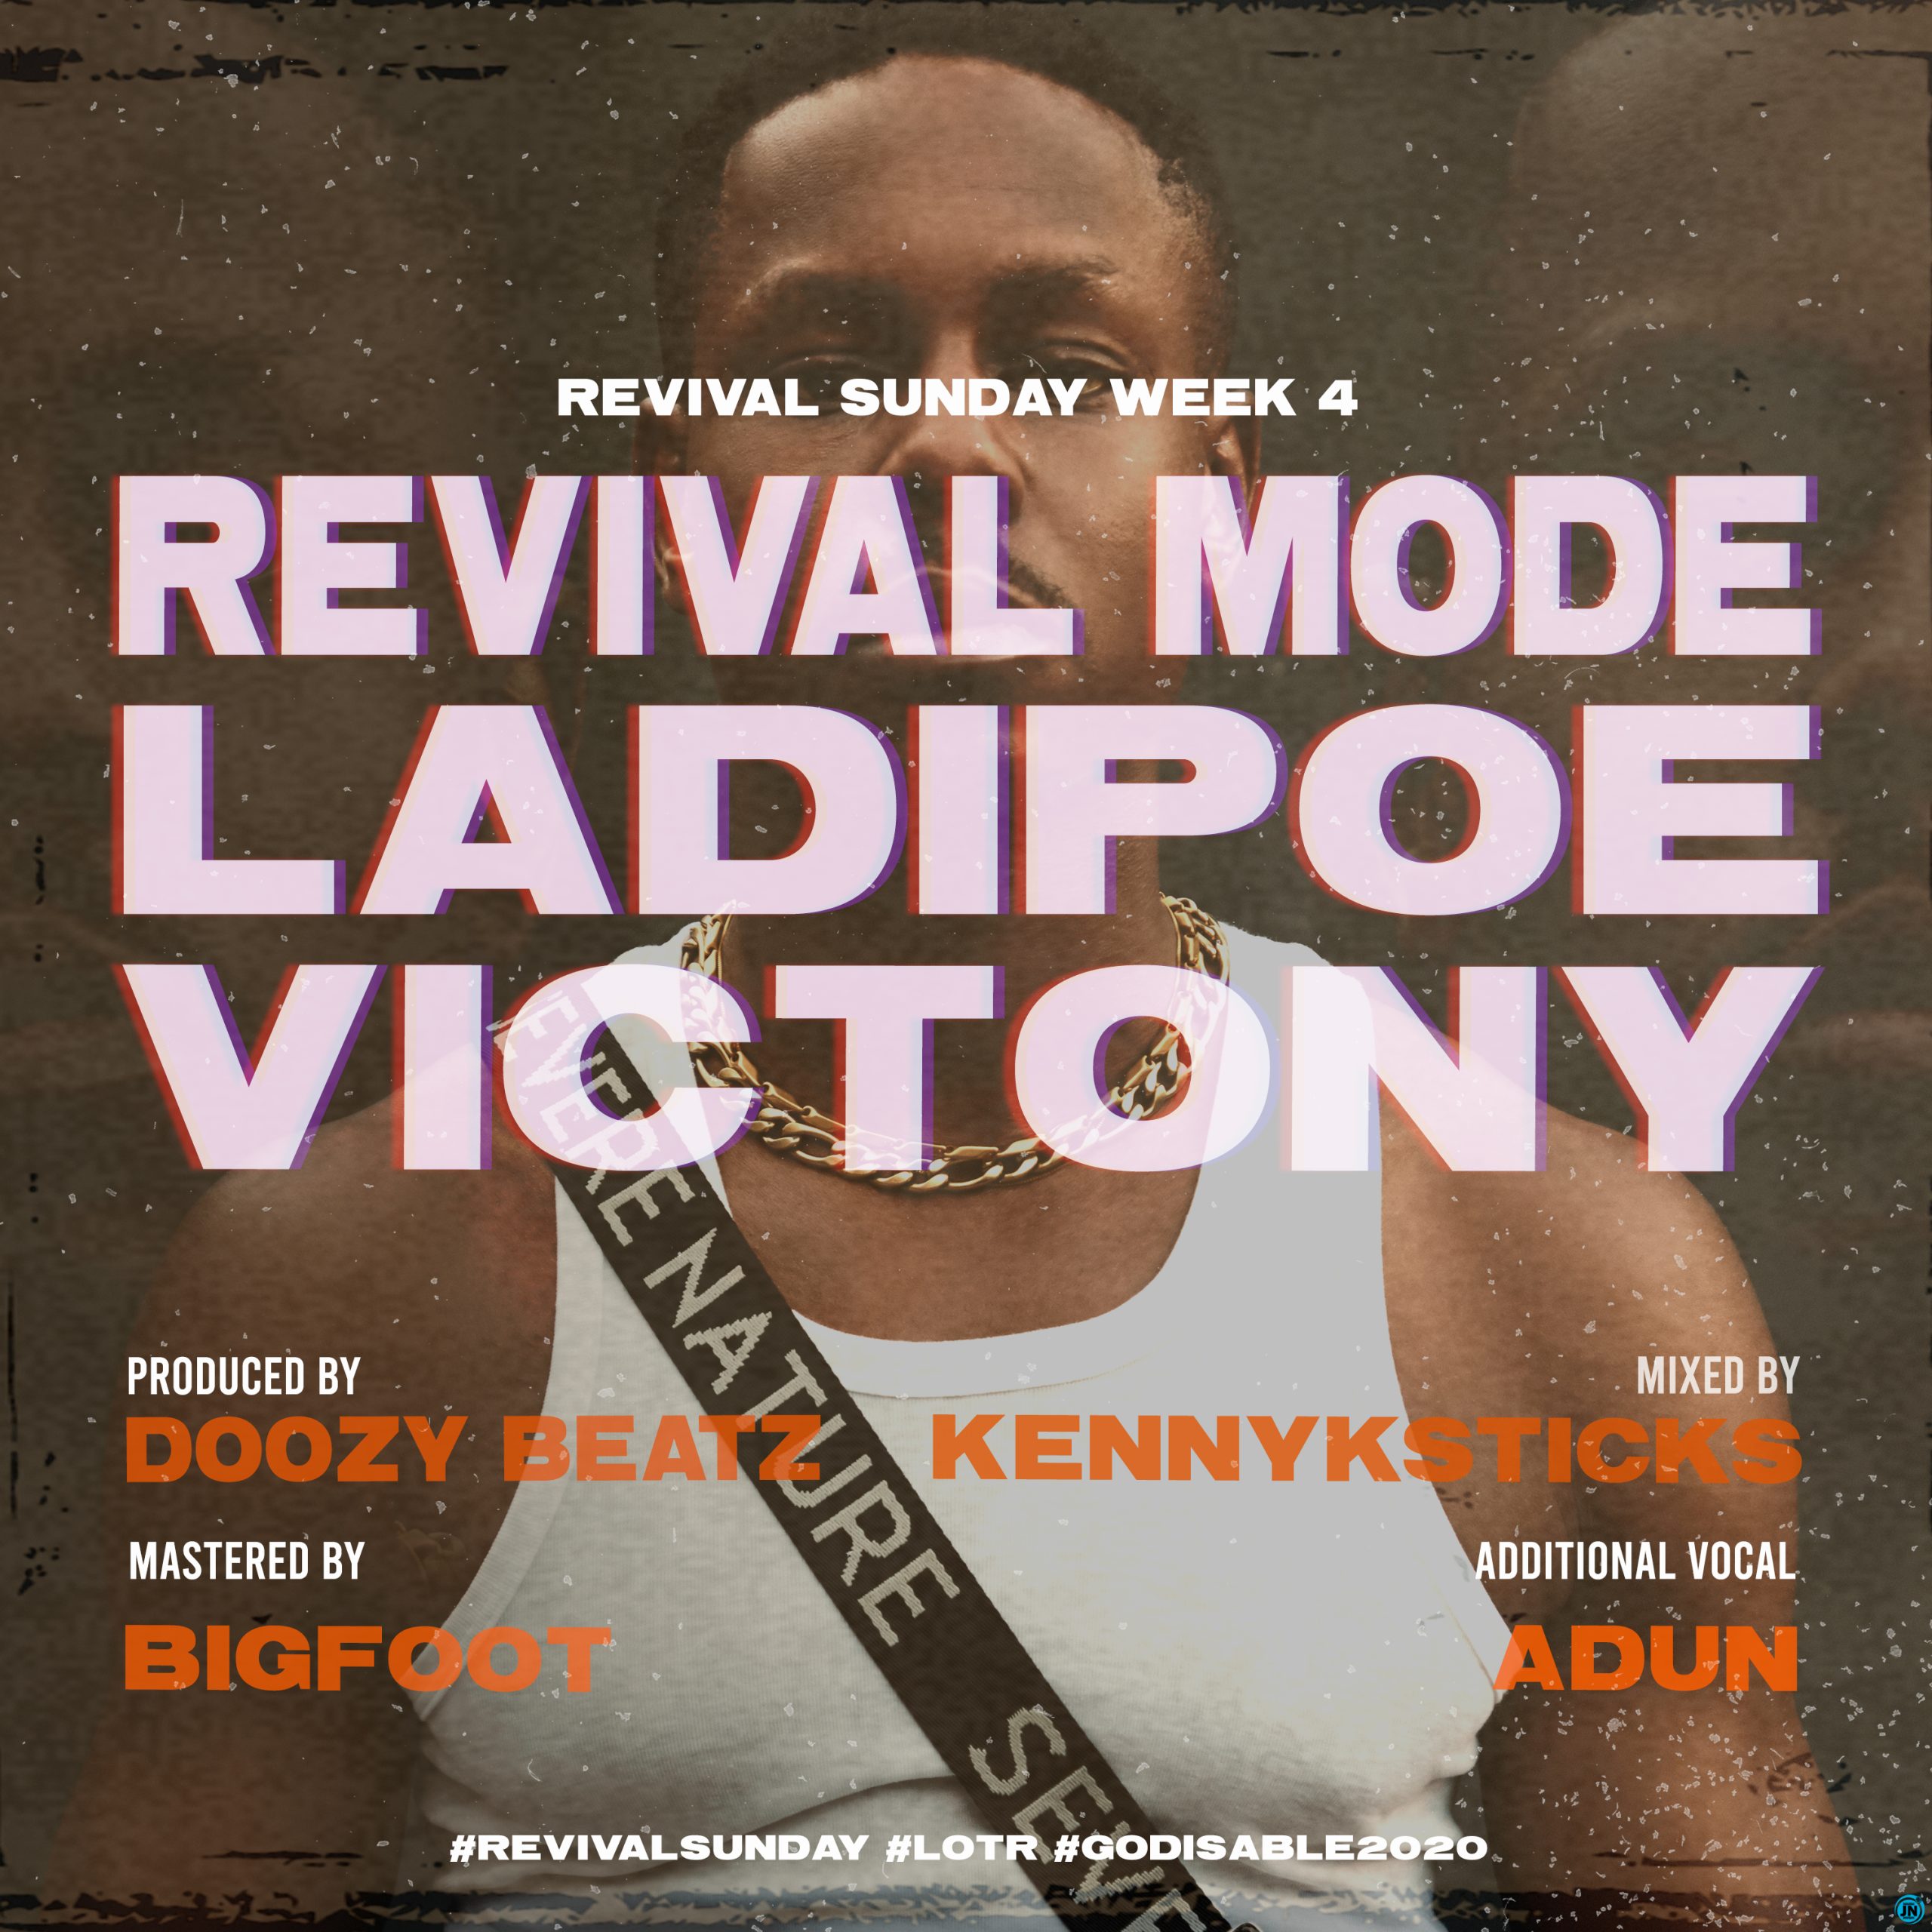 LadiPoe - Revival Mode ft. Victony   Mp3 Download lyrics